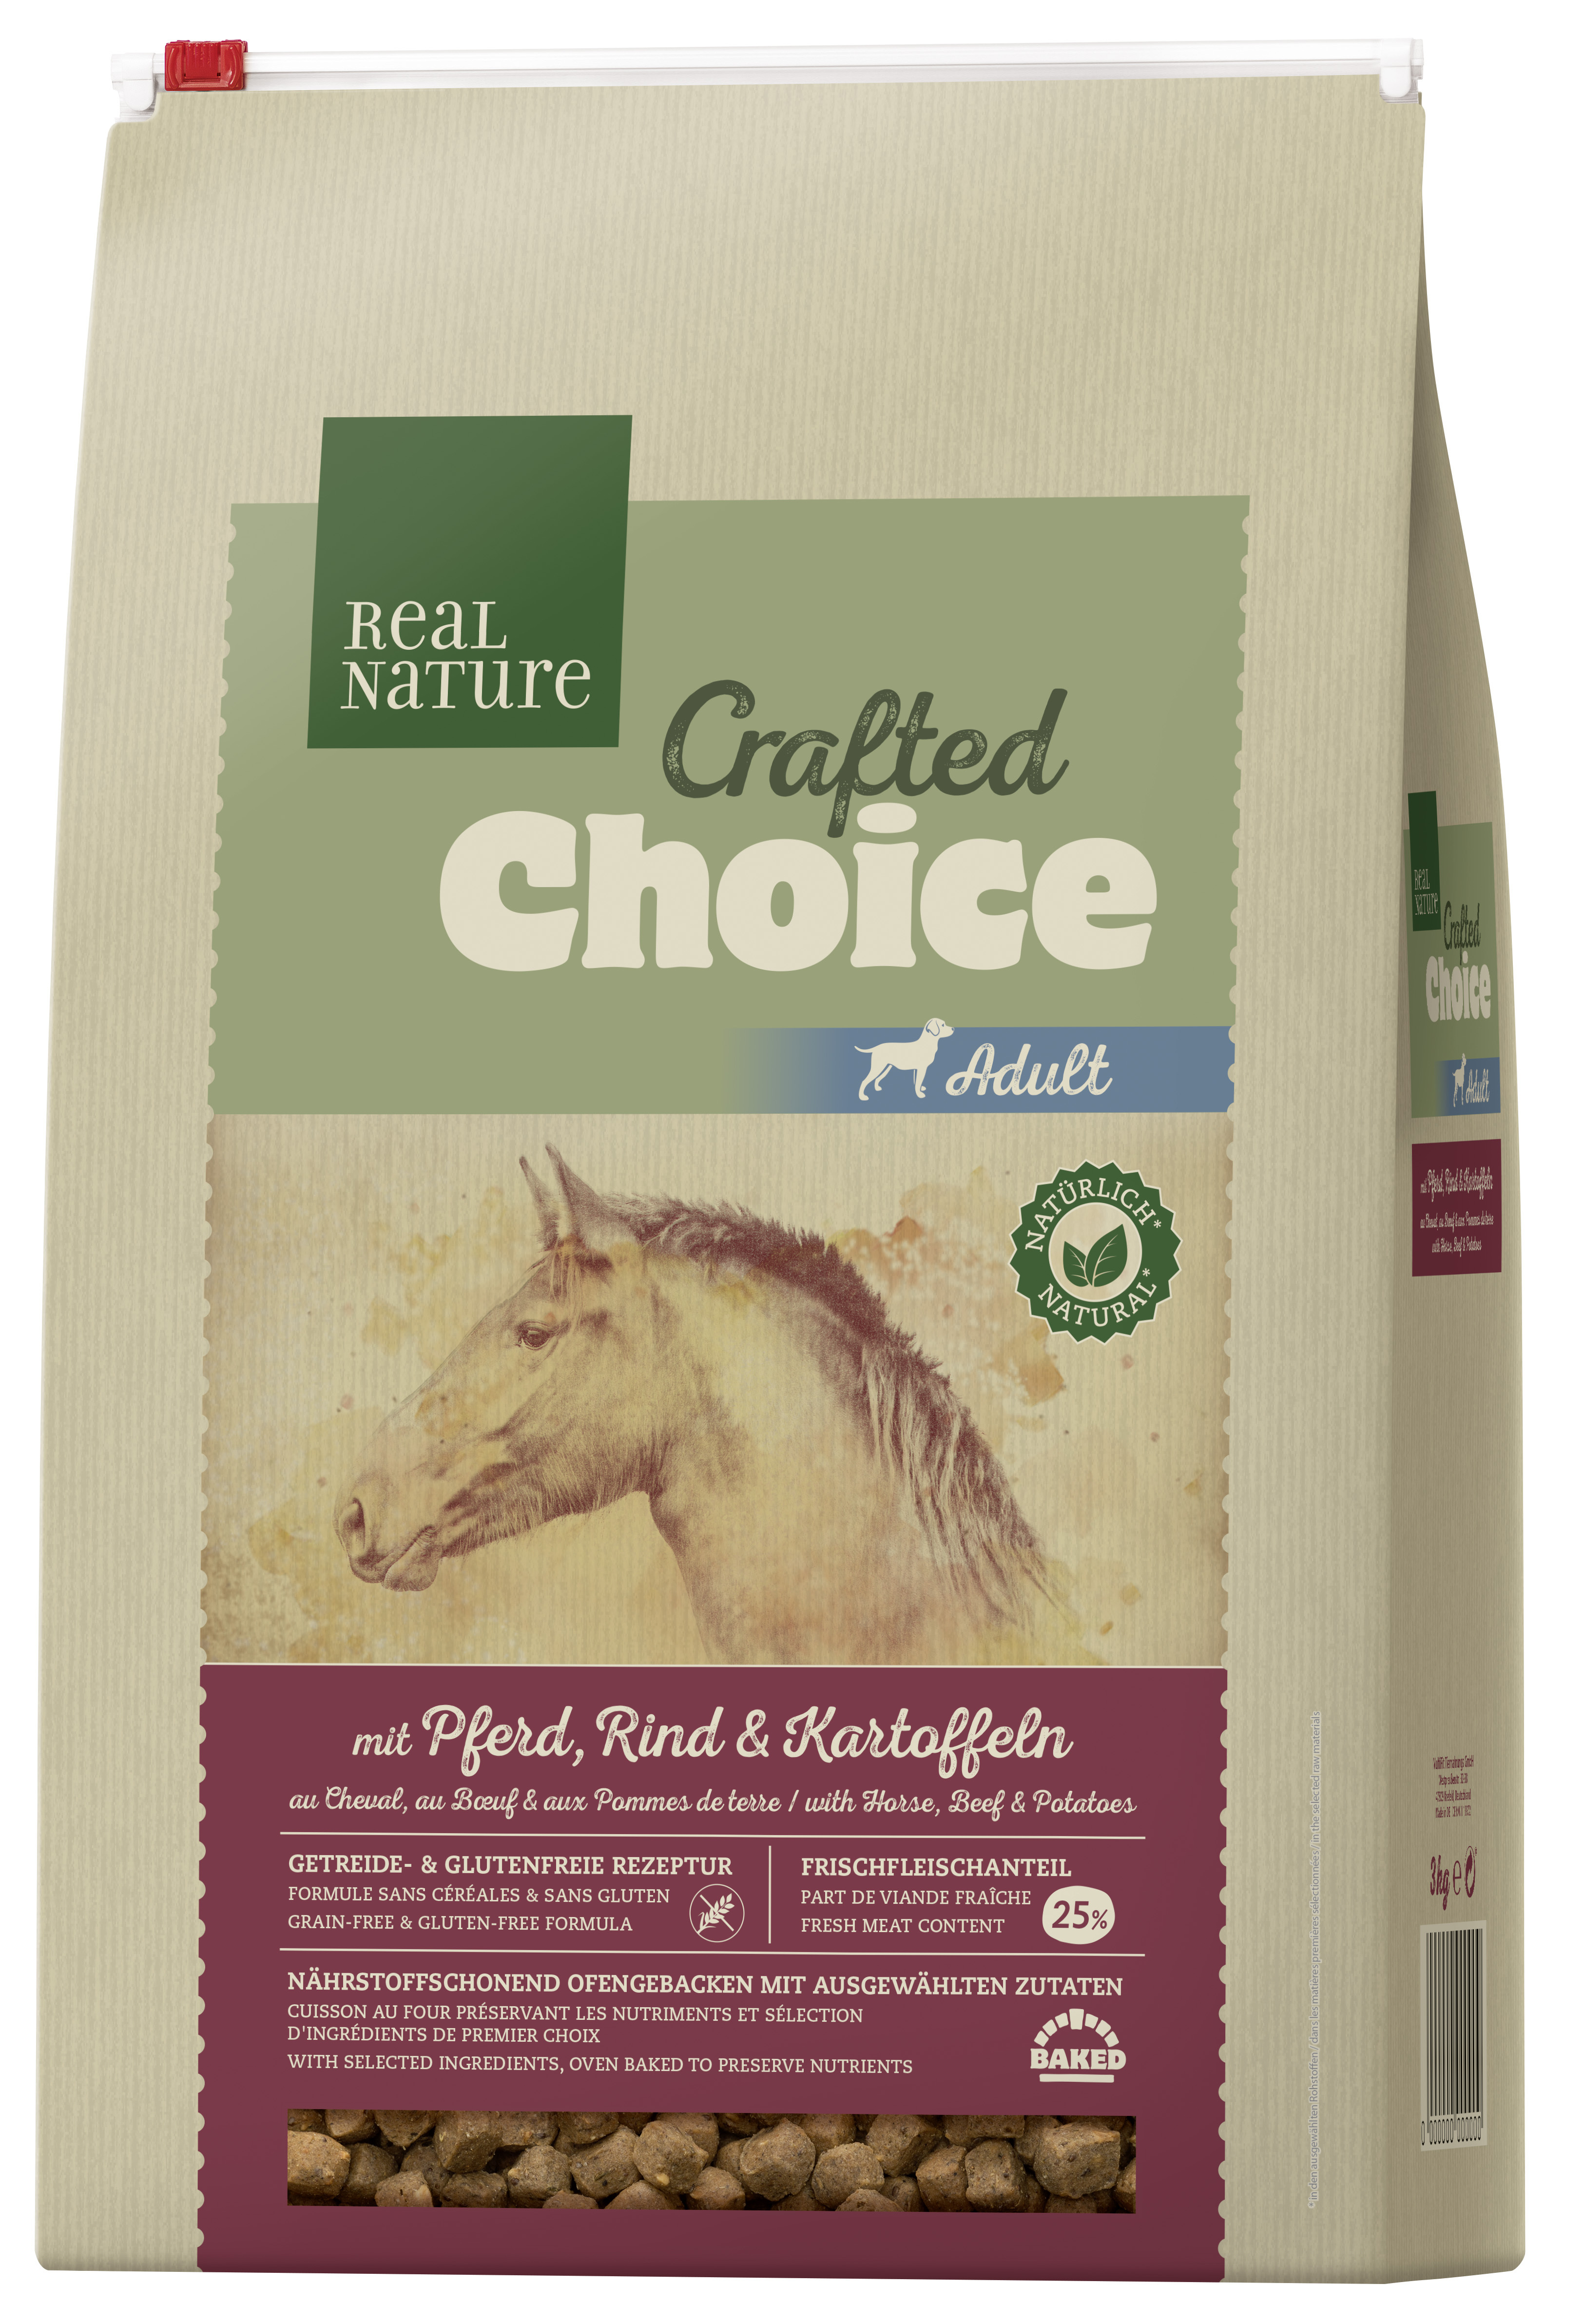 REAL NATURE Crafted Choice Pferd, Rind & Kartoffel gebacken 3kg